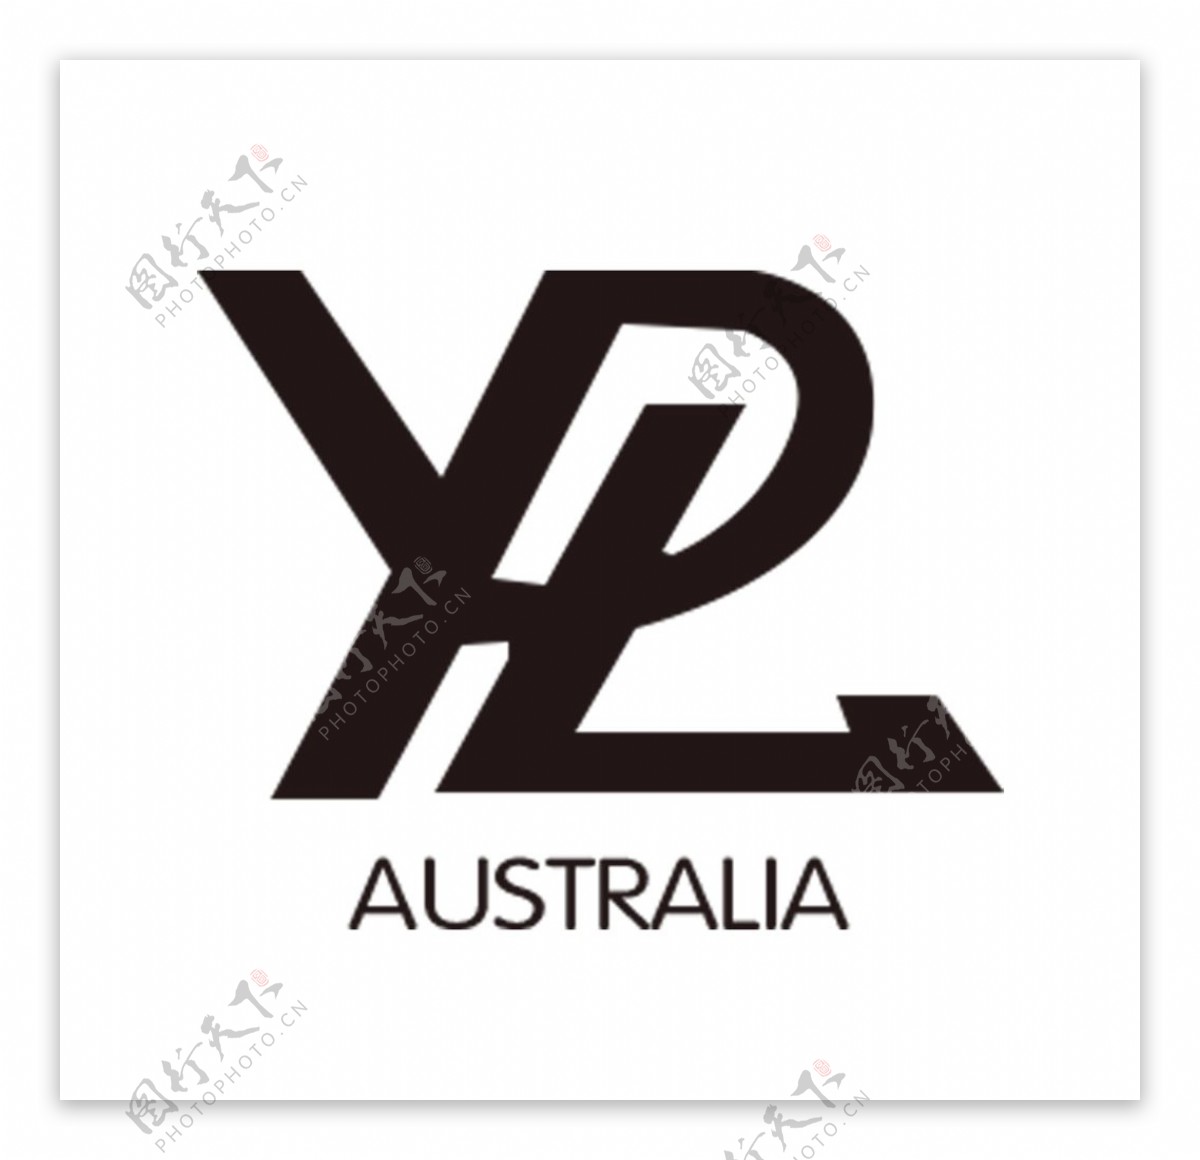 ypl澳洲瘦身裤logo